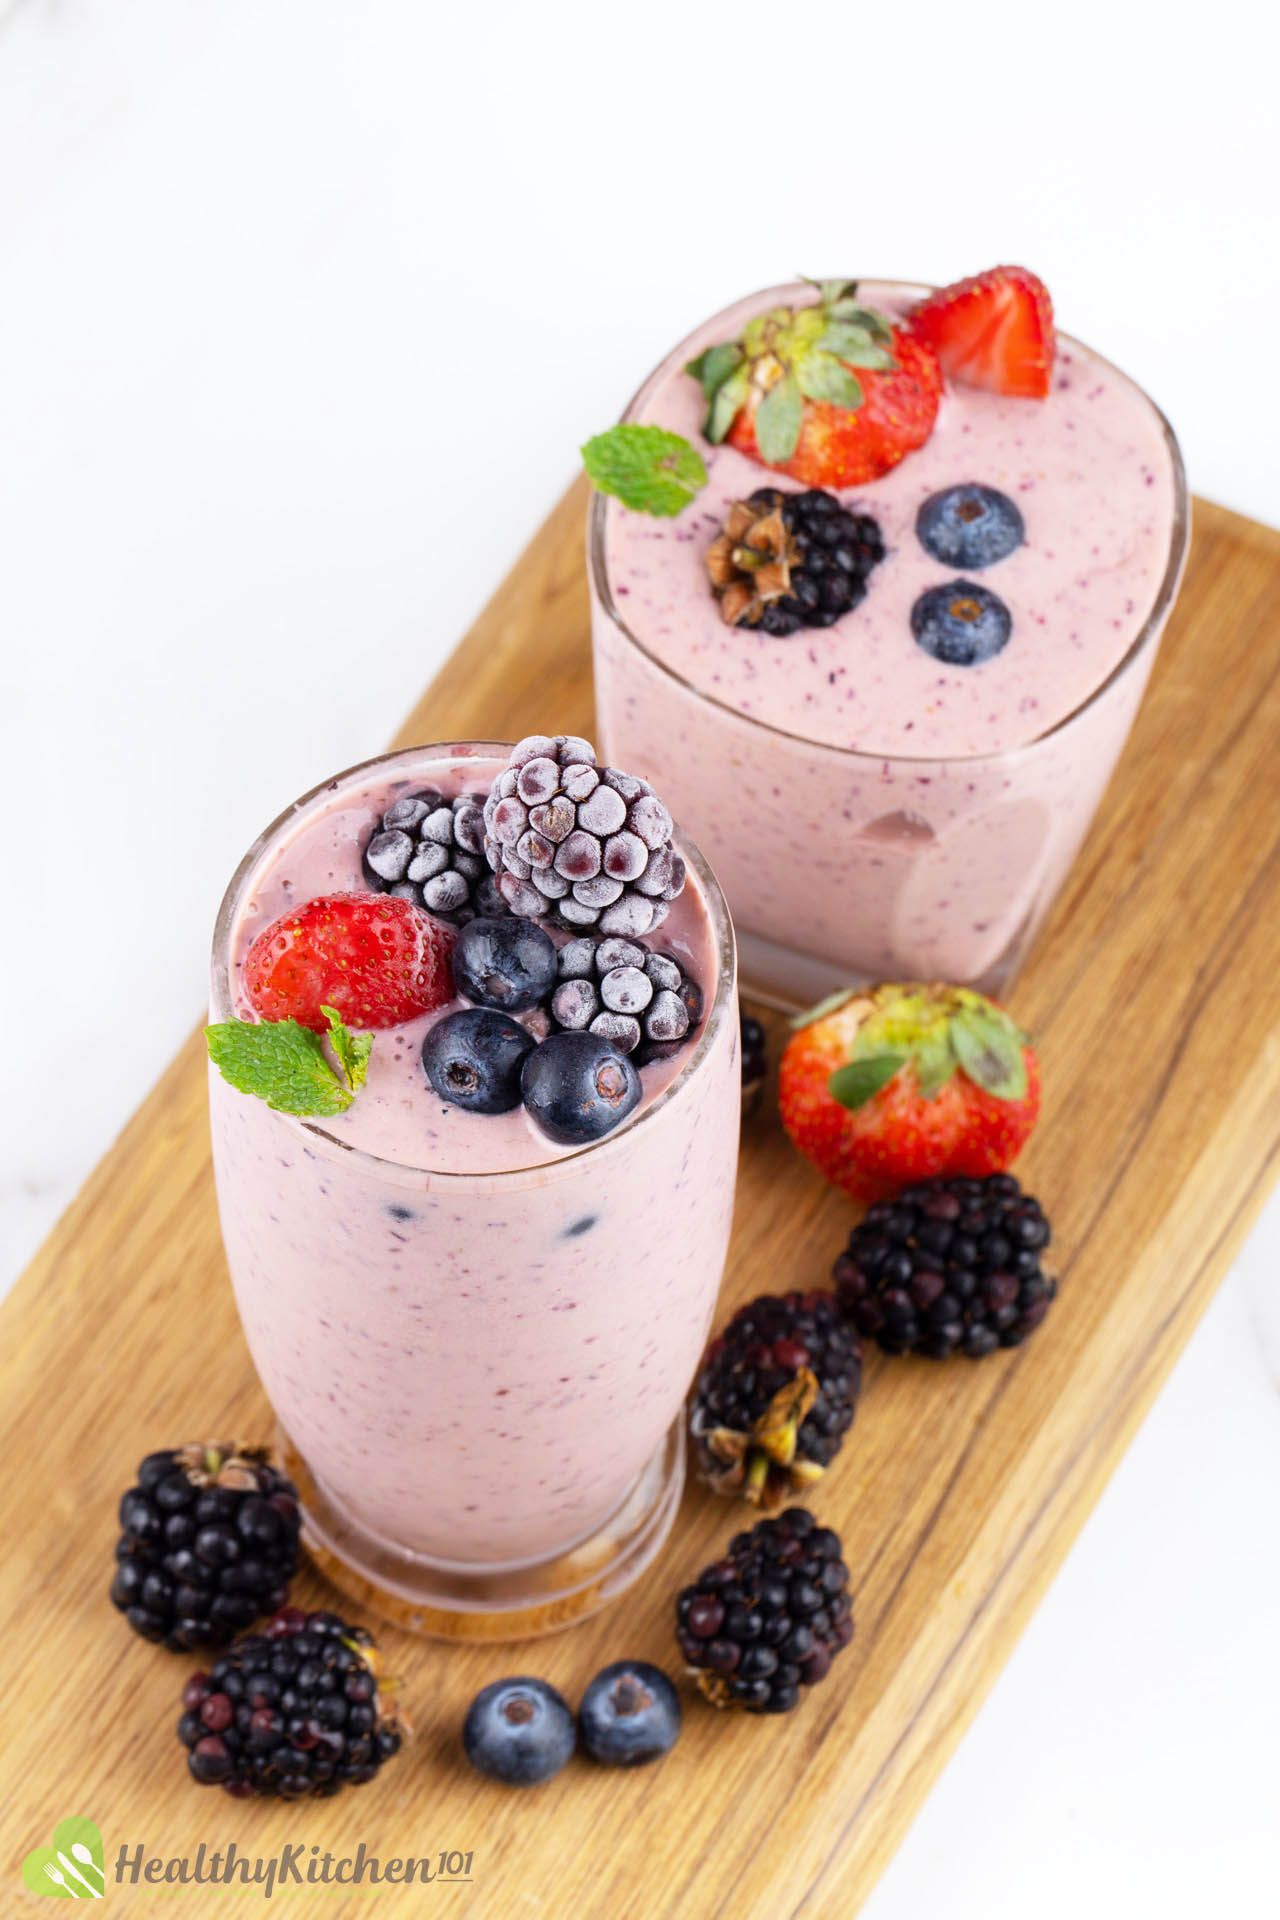 Frozen Fruit Smoothie Recipe - A Refreshing Berry-Mango Summer Blend